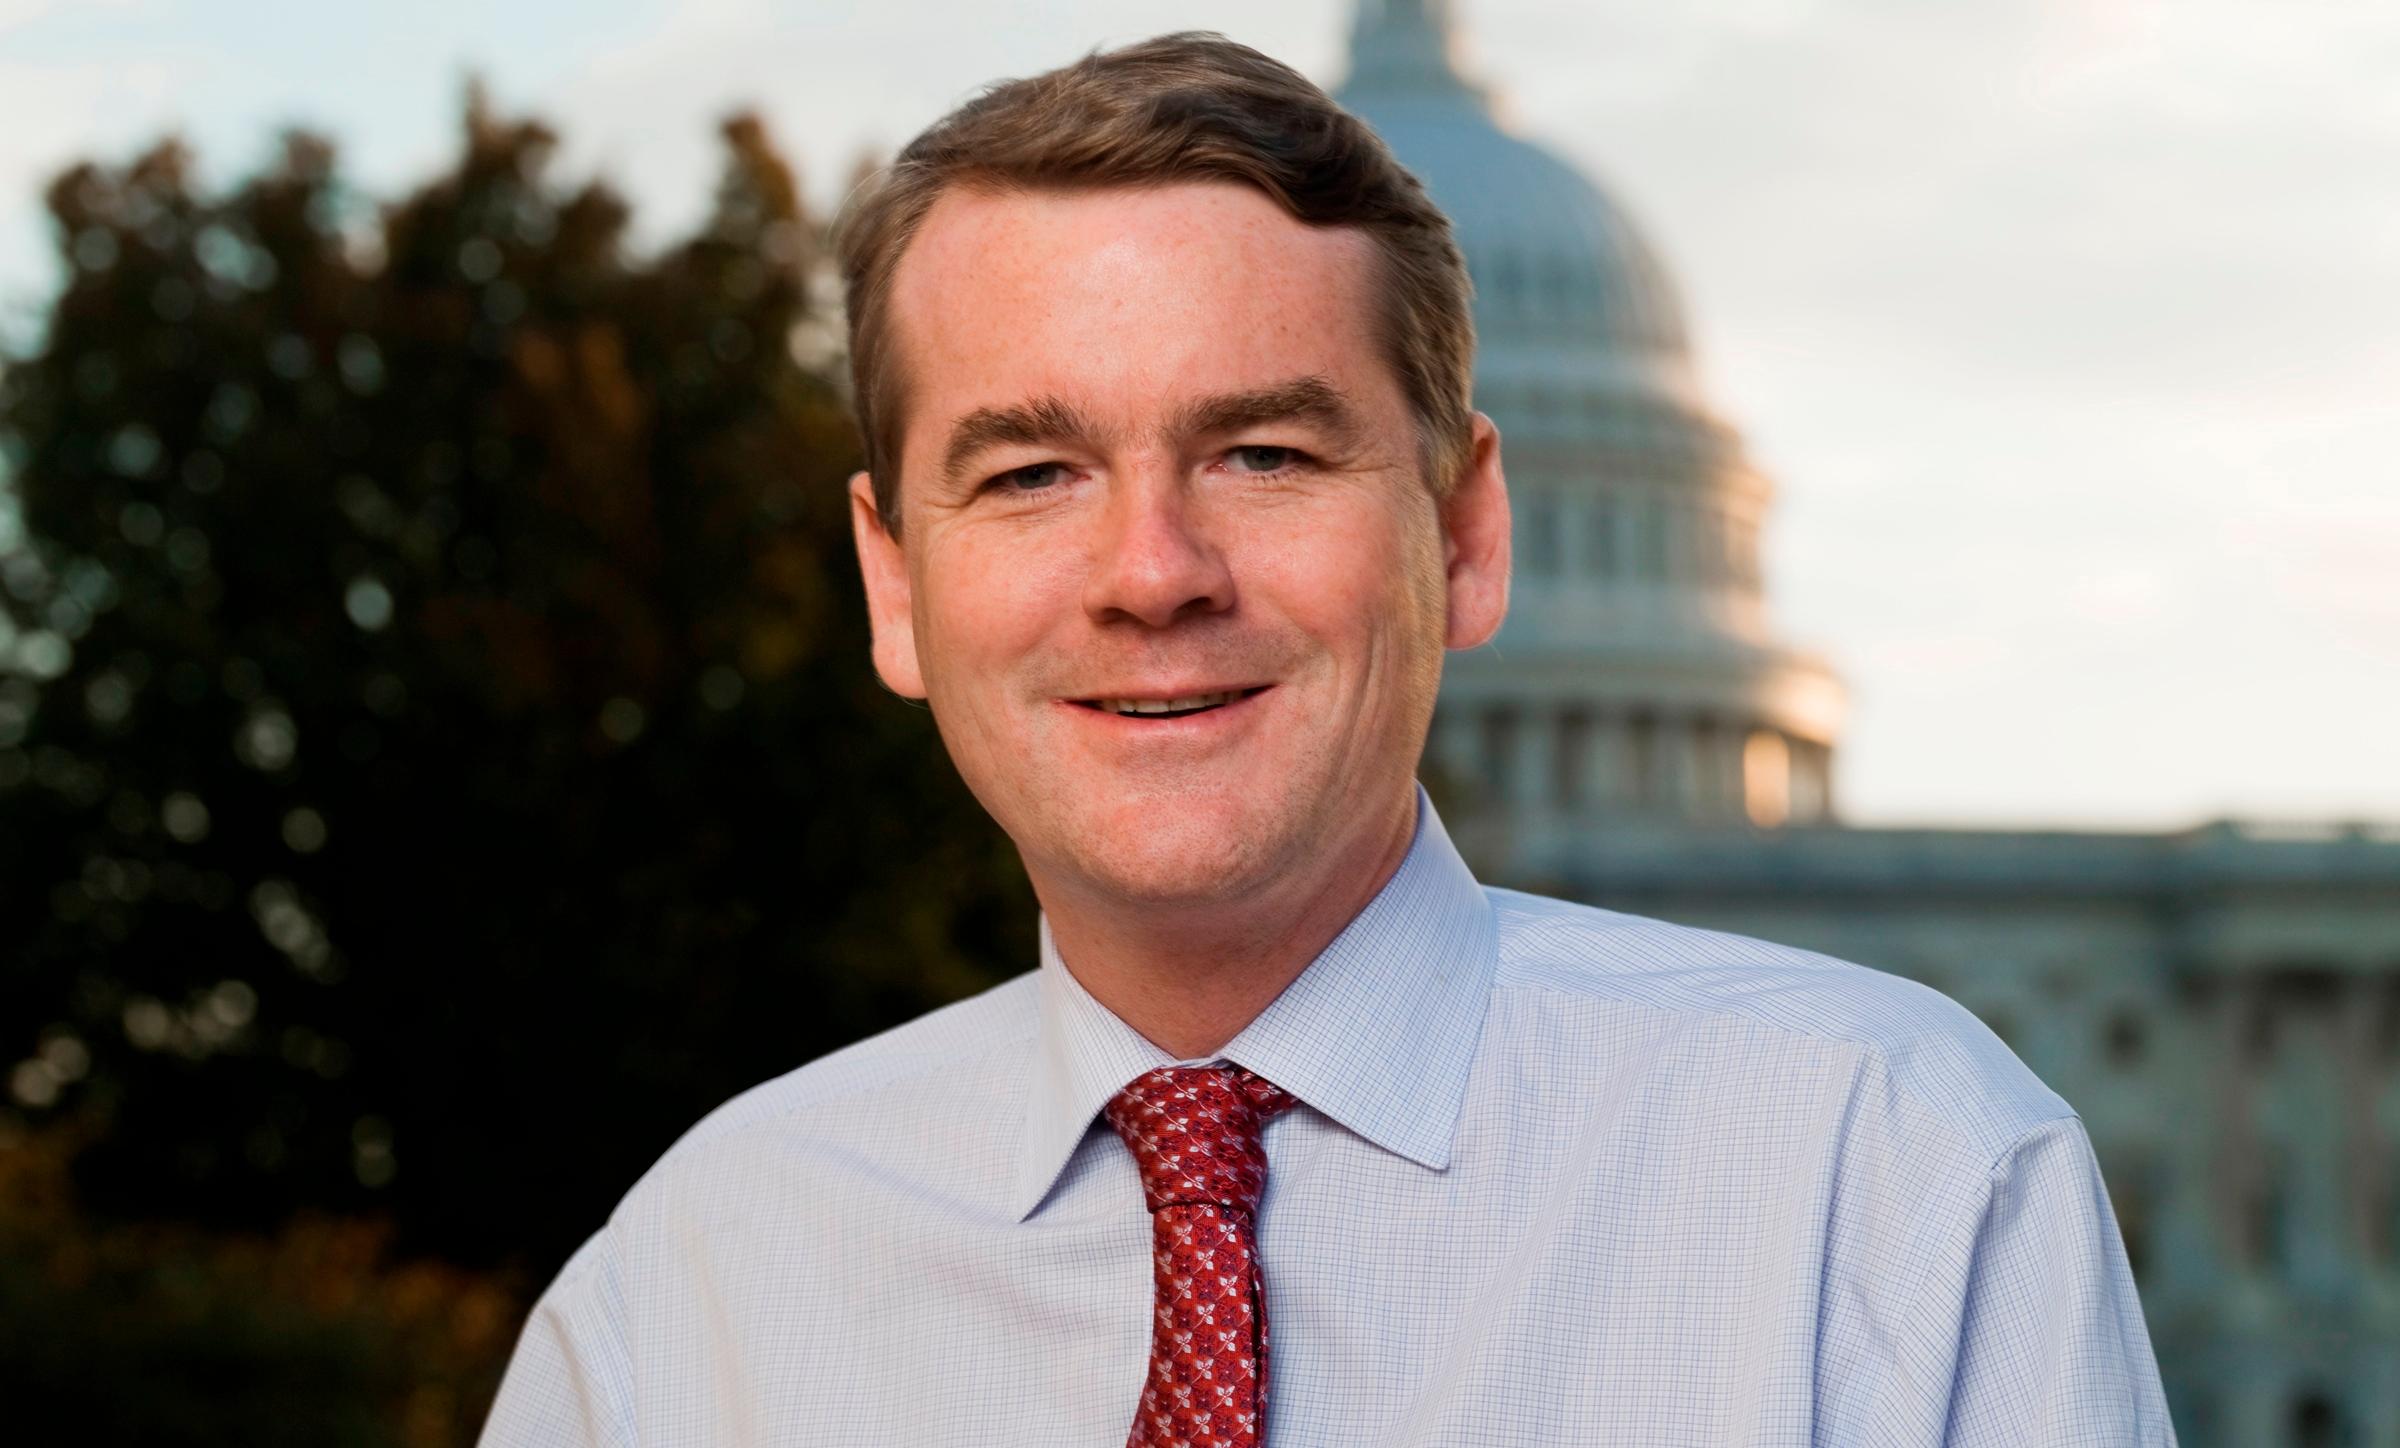 Photo: U.S. Senator Michael Bennett